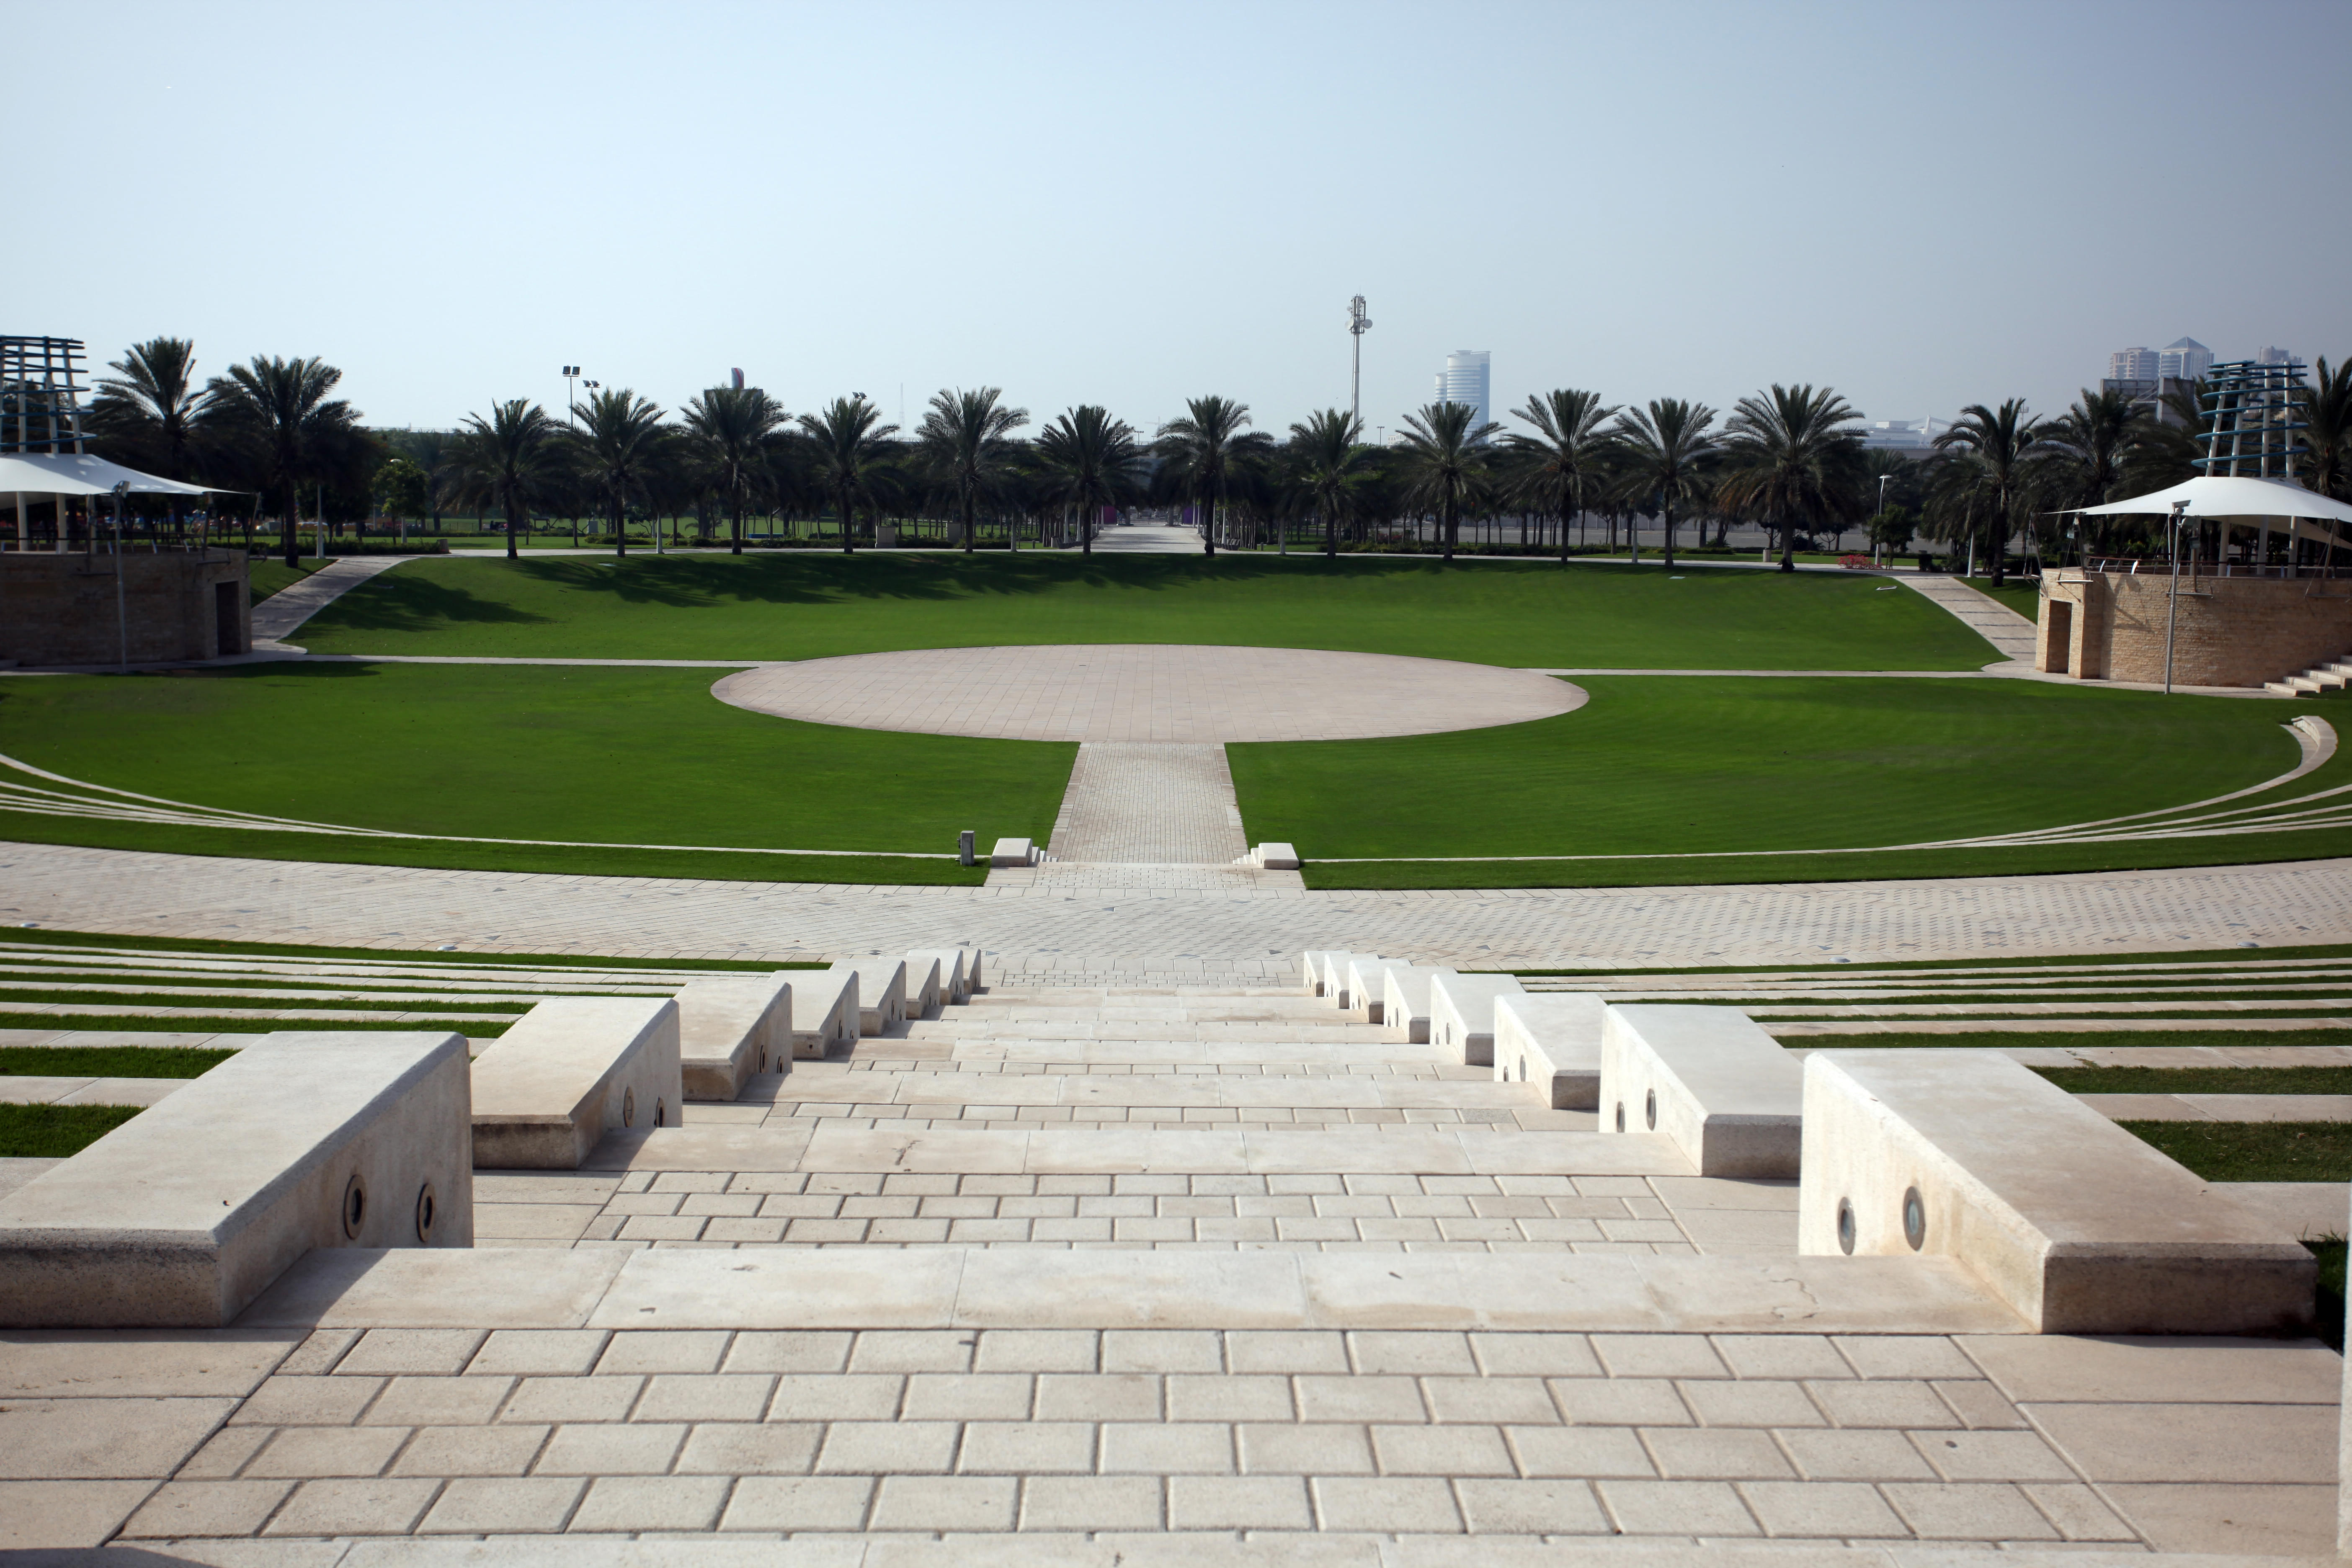 Zabeel Park Dubai